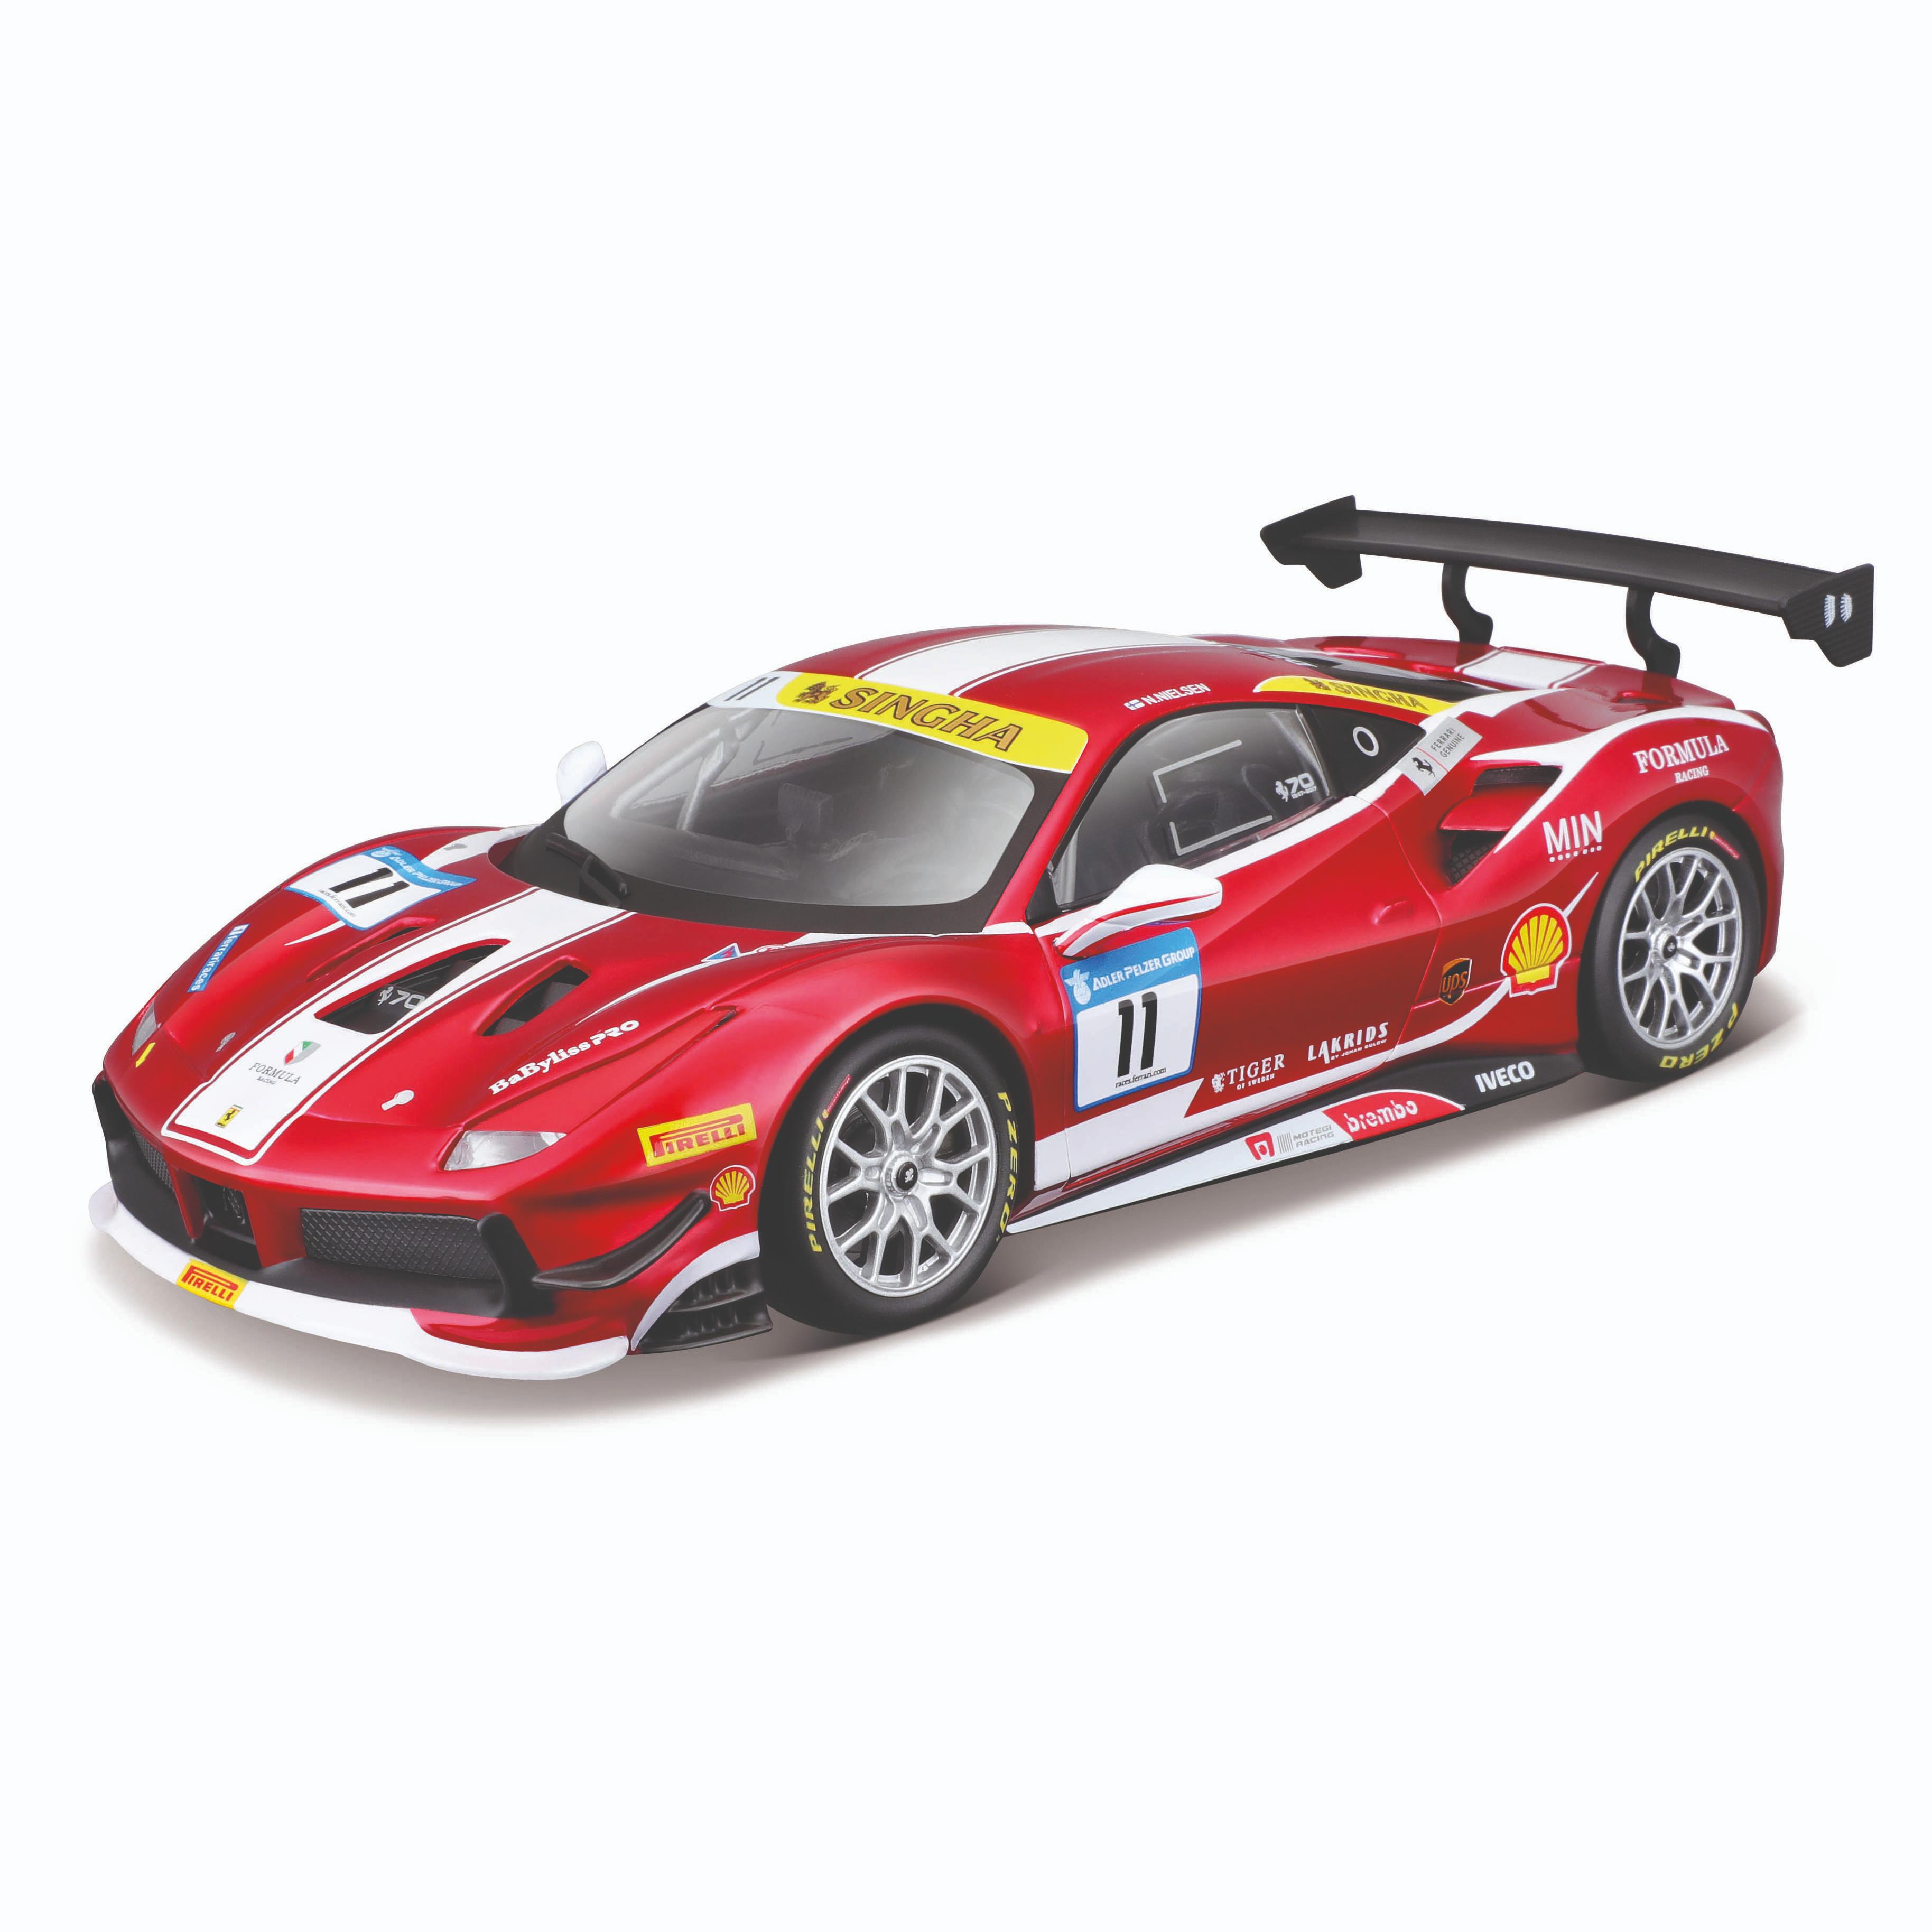 Коллекционная машинка Bburago Феррари 1:24 Ferrari Racing 488 Challenge,красная bburago 1 18 ferrari 70th anniversary ferrari sf70h 2017 f1 racing model alloy car model collect gifts toy